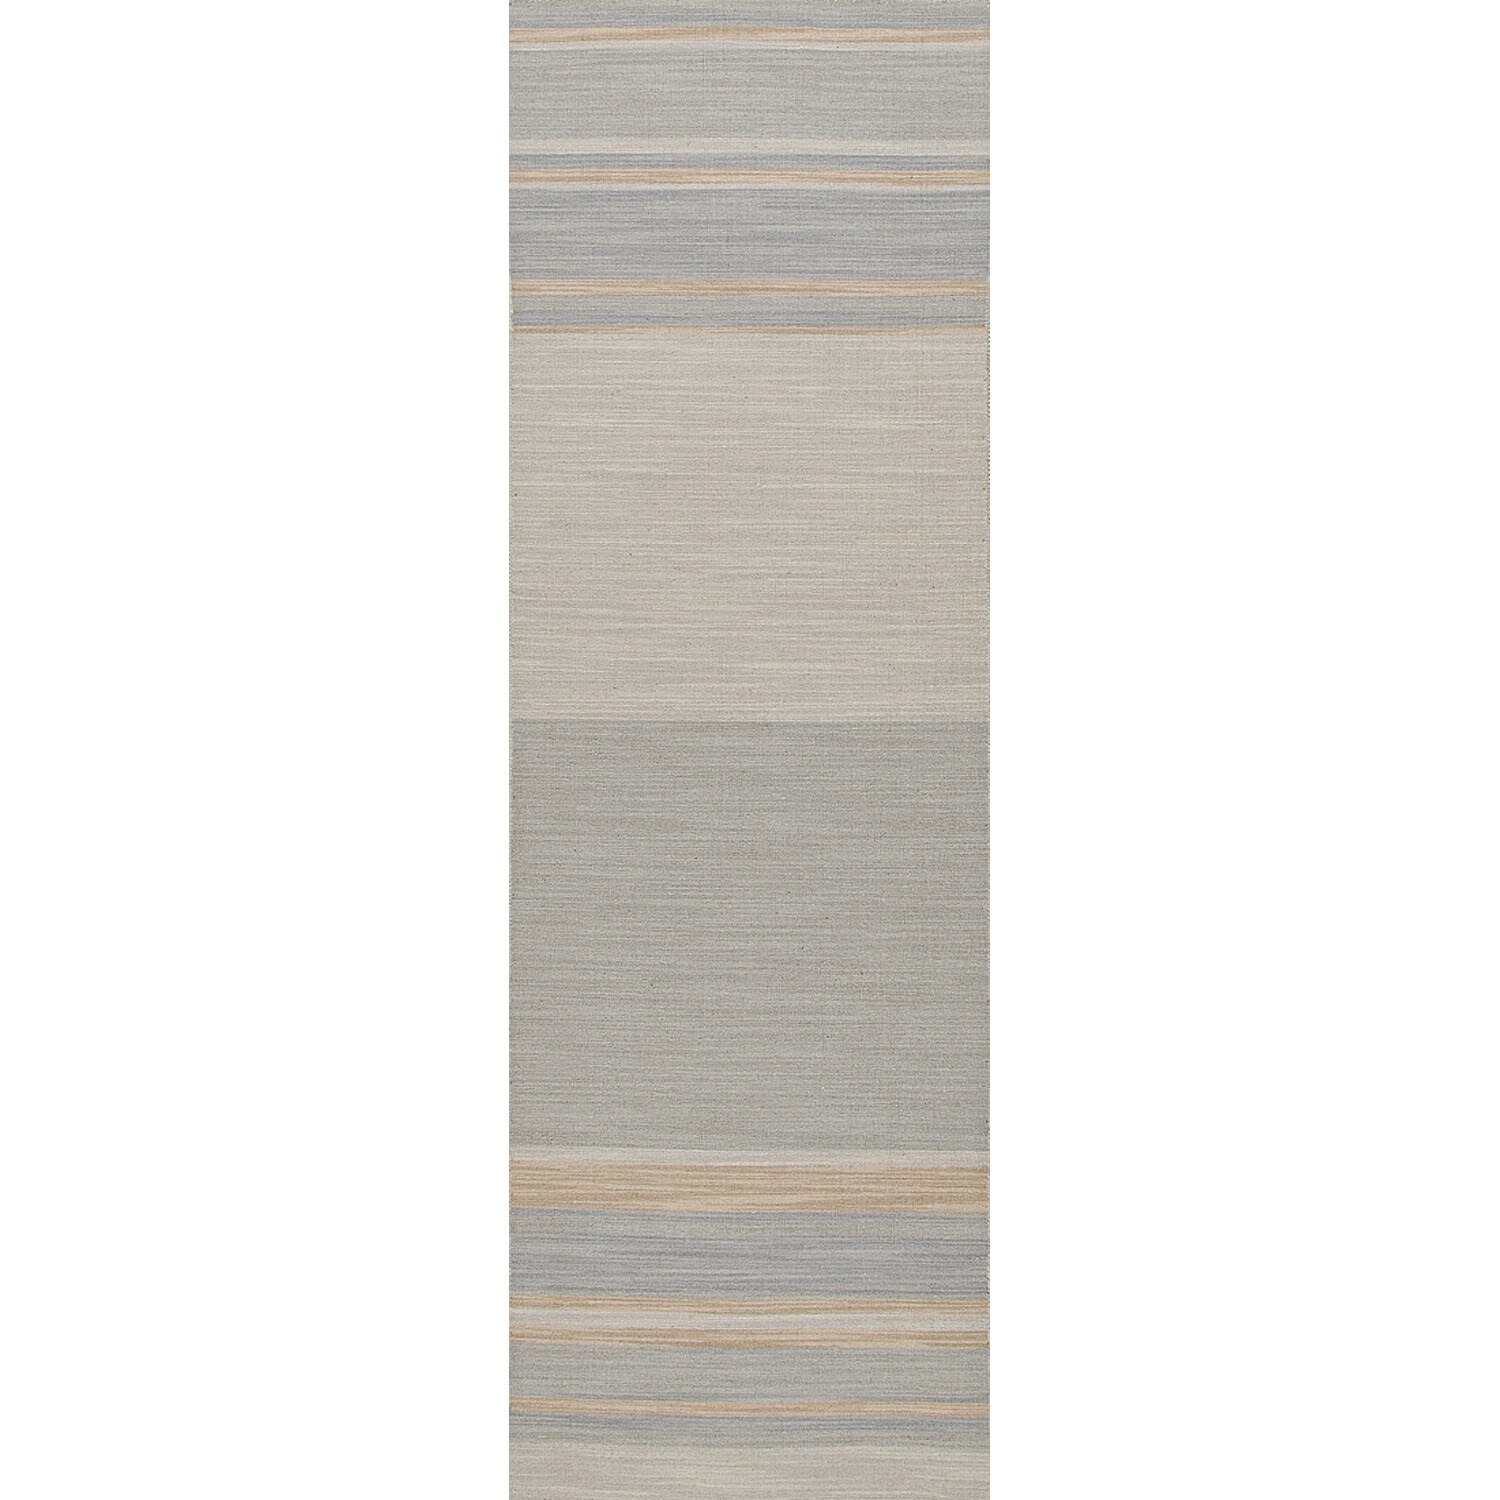 Handmade Flat weave Stripe pattern Multicolored Wool Rug (26 X 8)